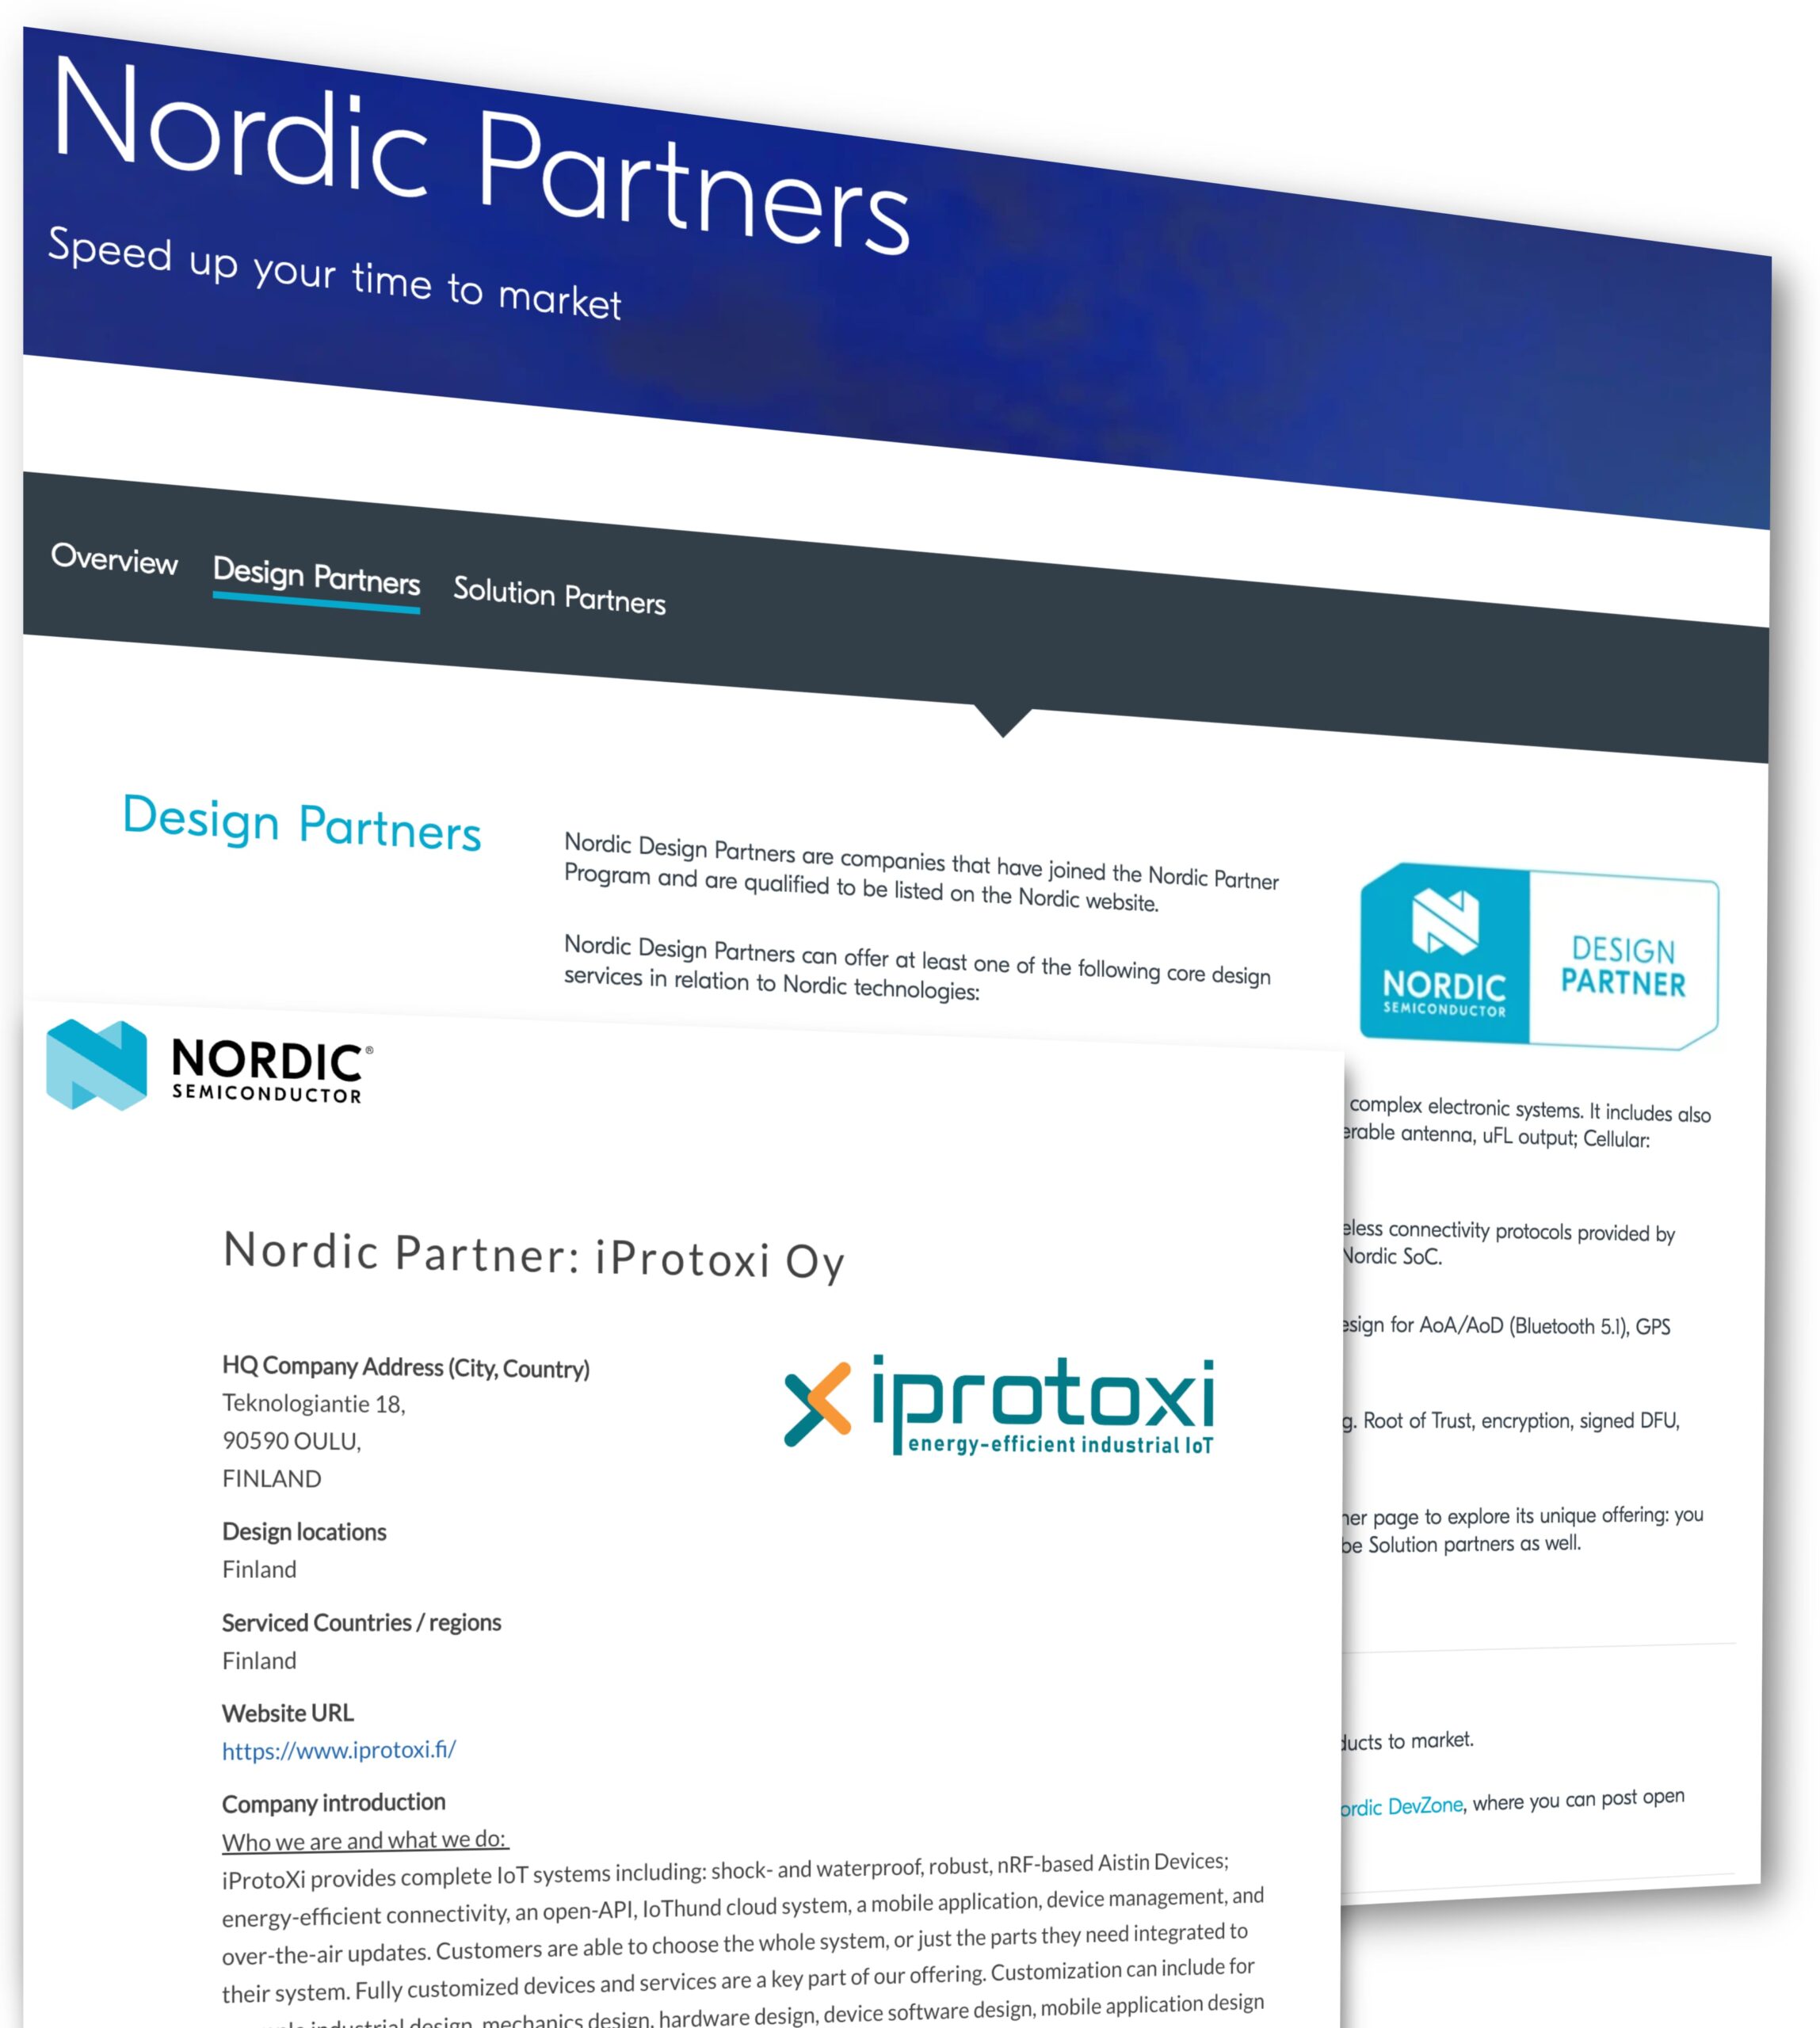 iProtoXi is now Acconeer development partner